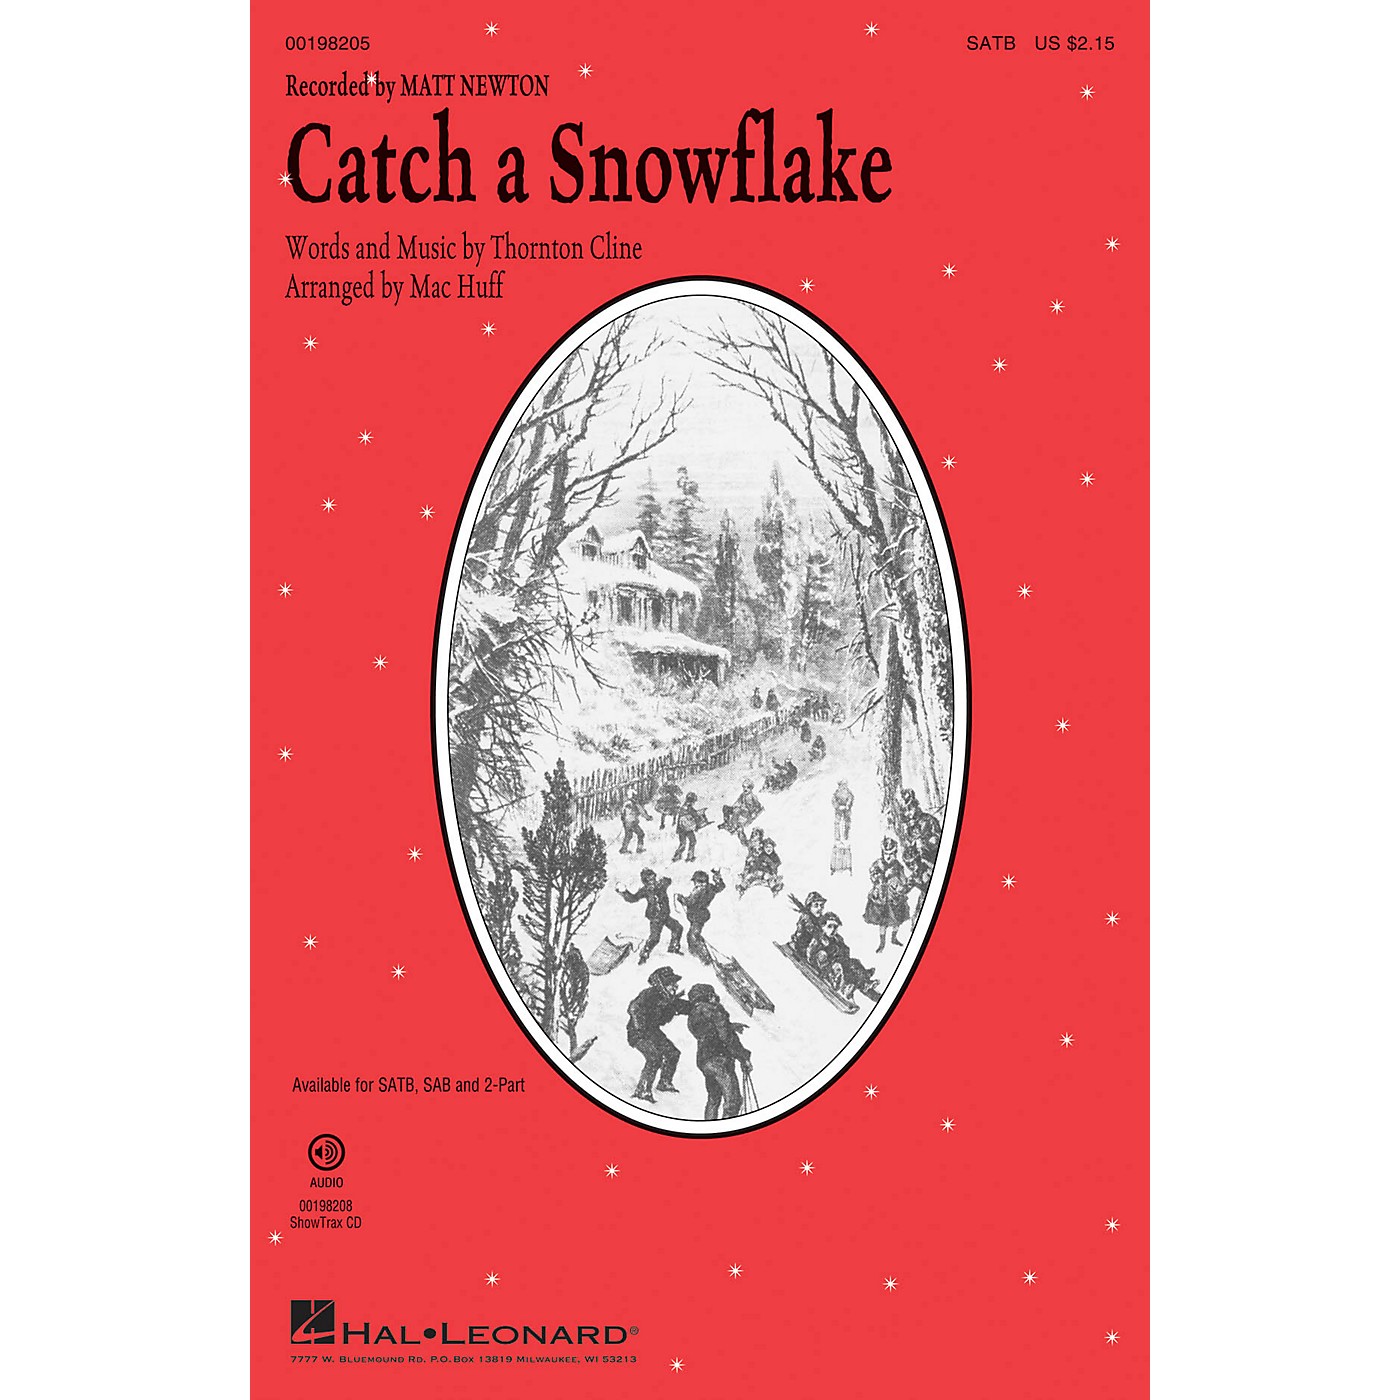 Hal Leonard Catch a Snowflake SATB by Matt Newton arranged by Mac Huff thumbnail